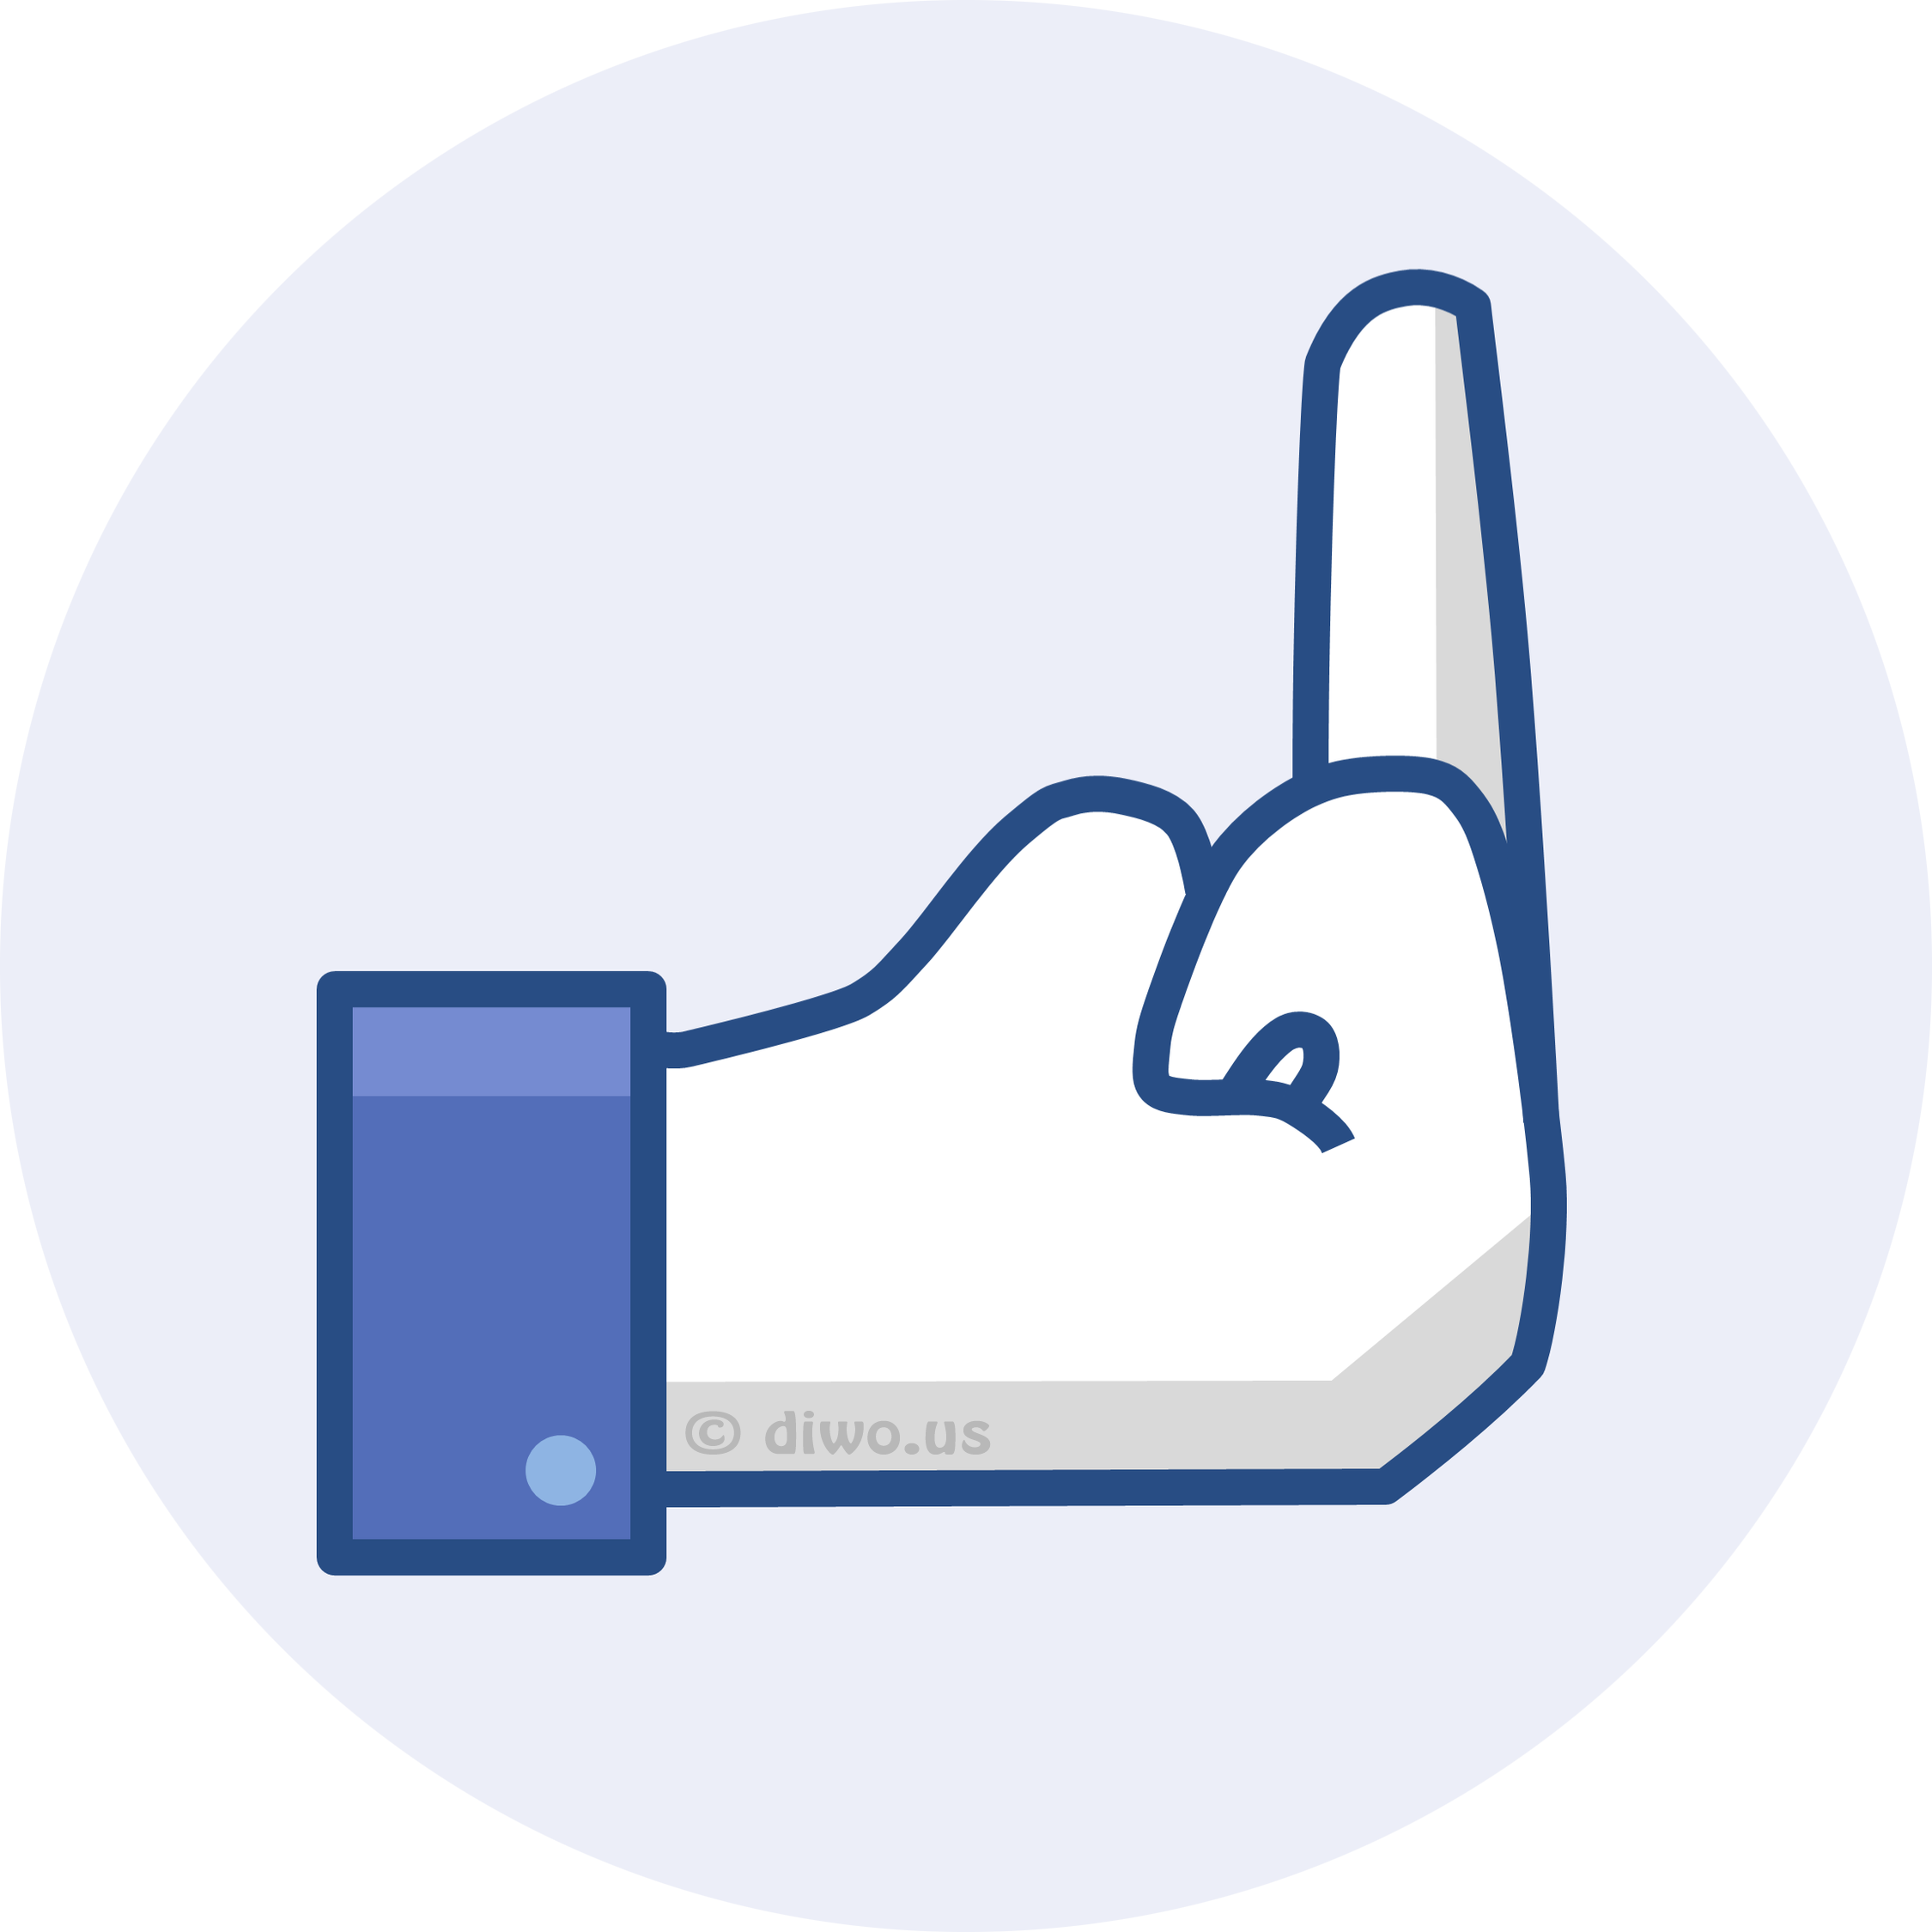 Diwous - Facebook Reactions - Fuck Off, like or dislike